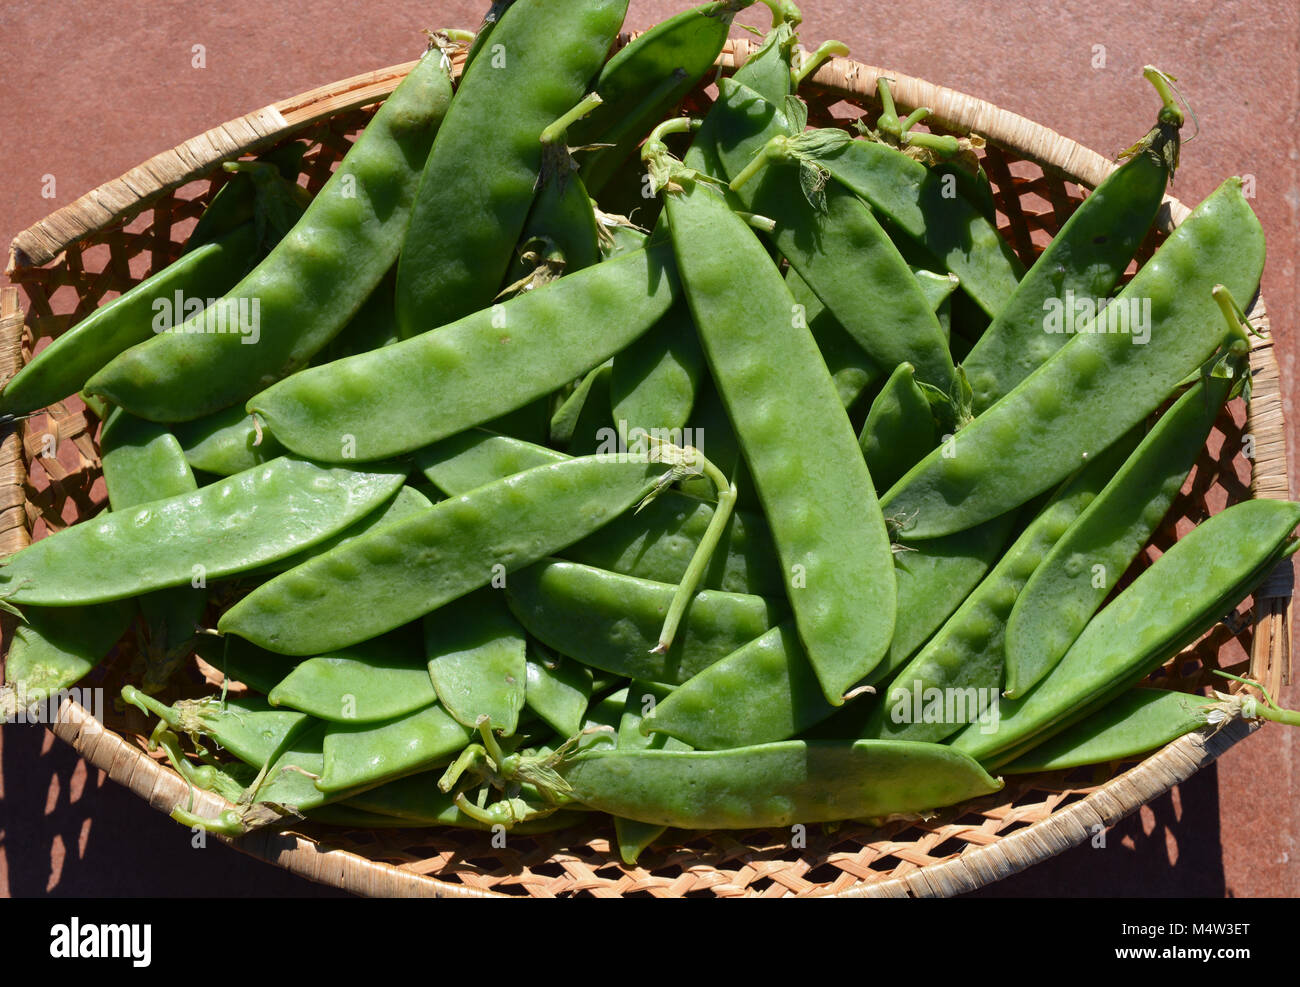 Pisum sativum var. saccharatum, also known as mangetout or snow peas Stock Photo